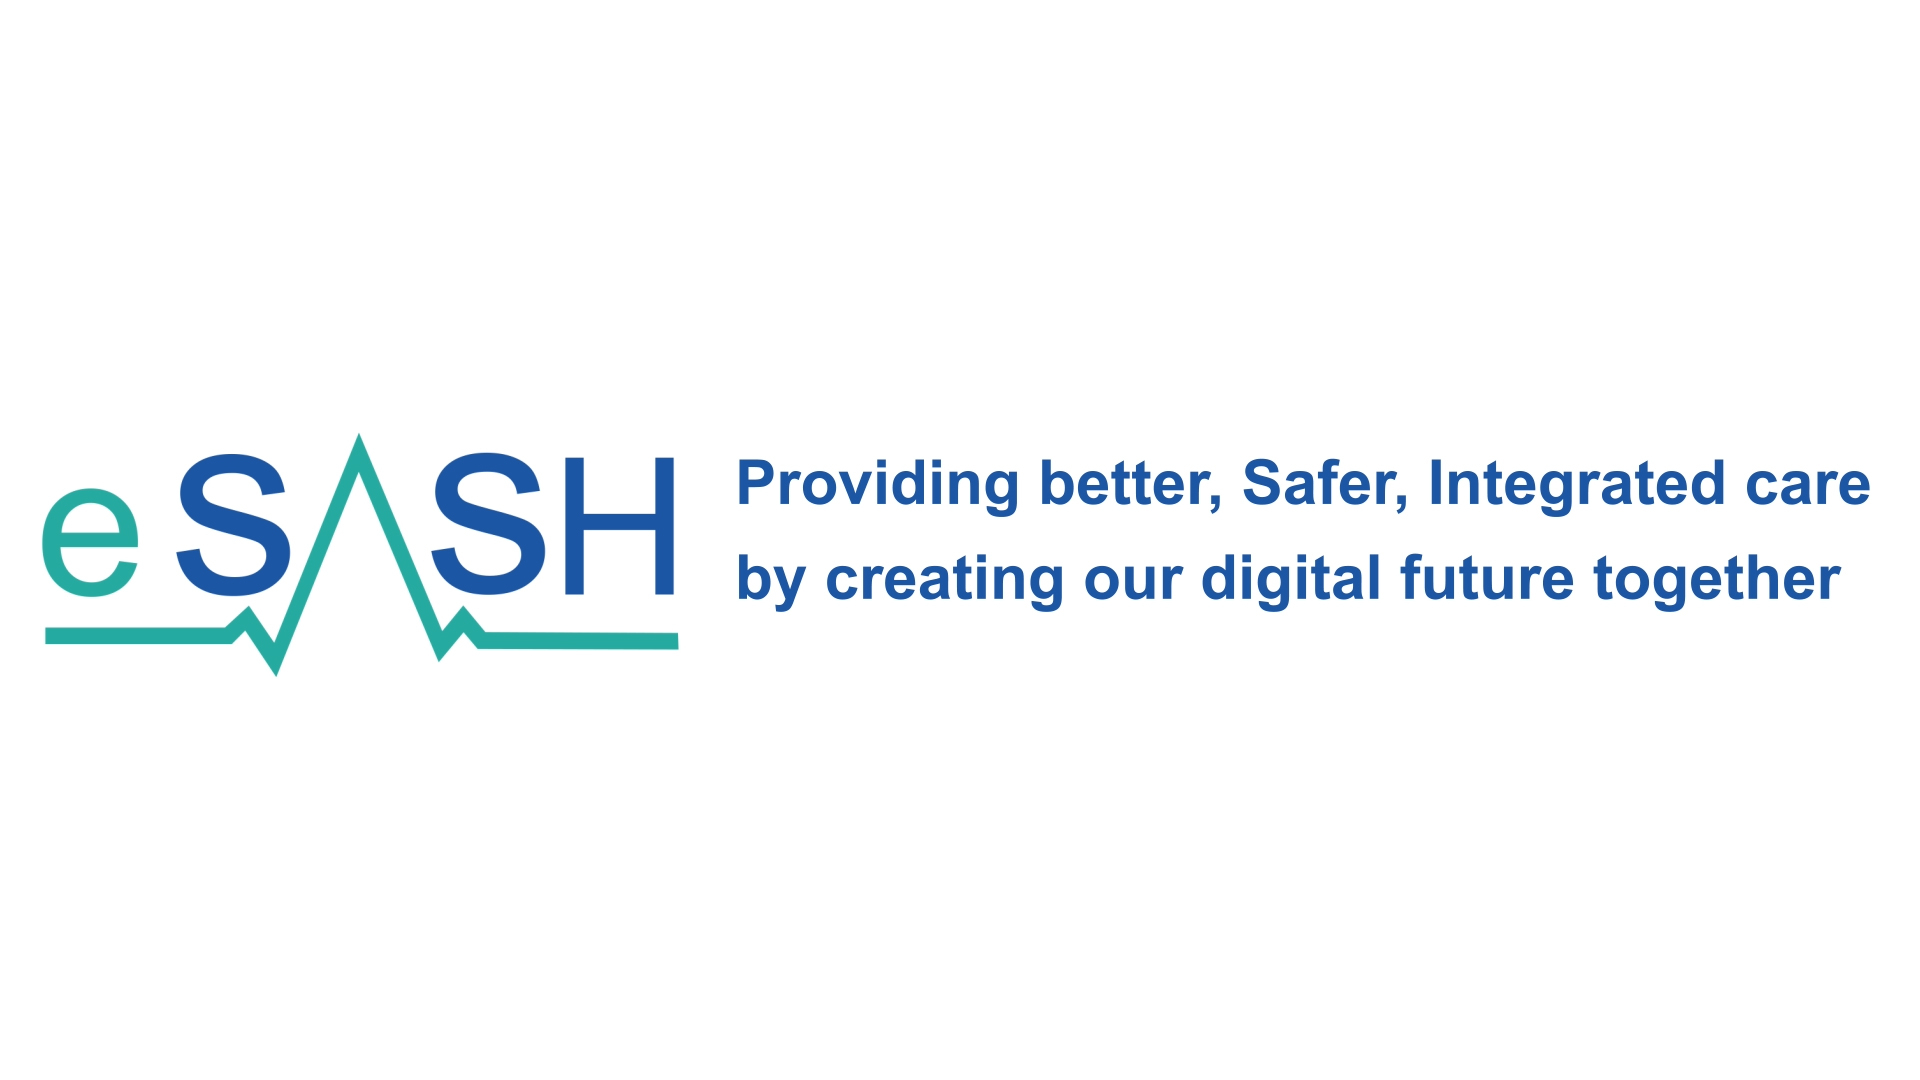 eSaSH logo full with tagline